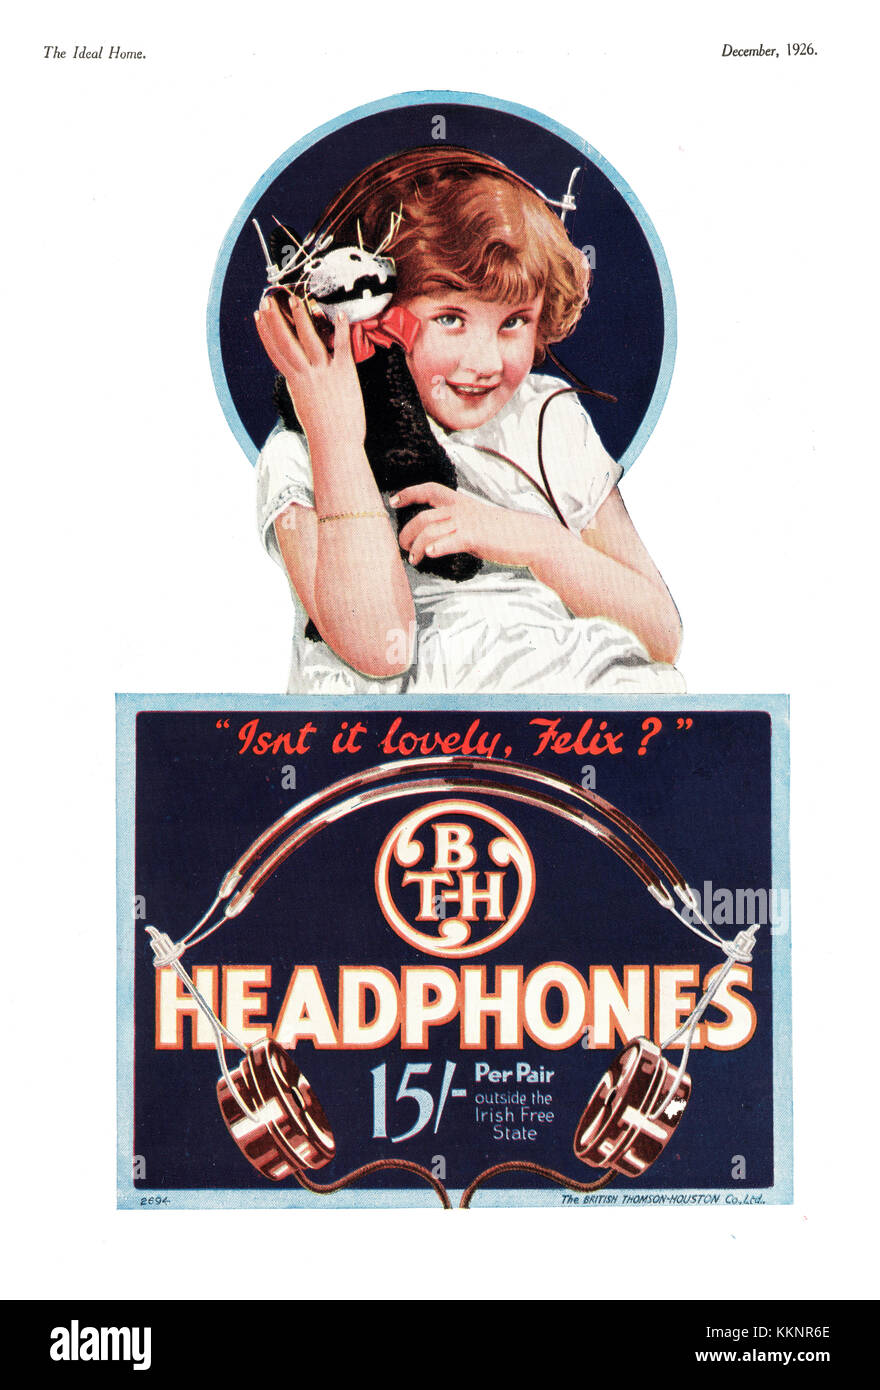 1926 UK Magazine BTH Headphones Advert Stock Photo